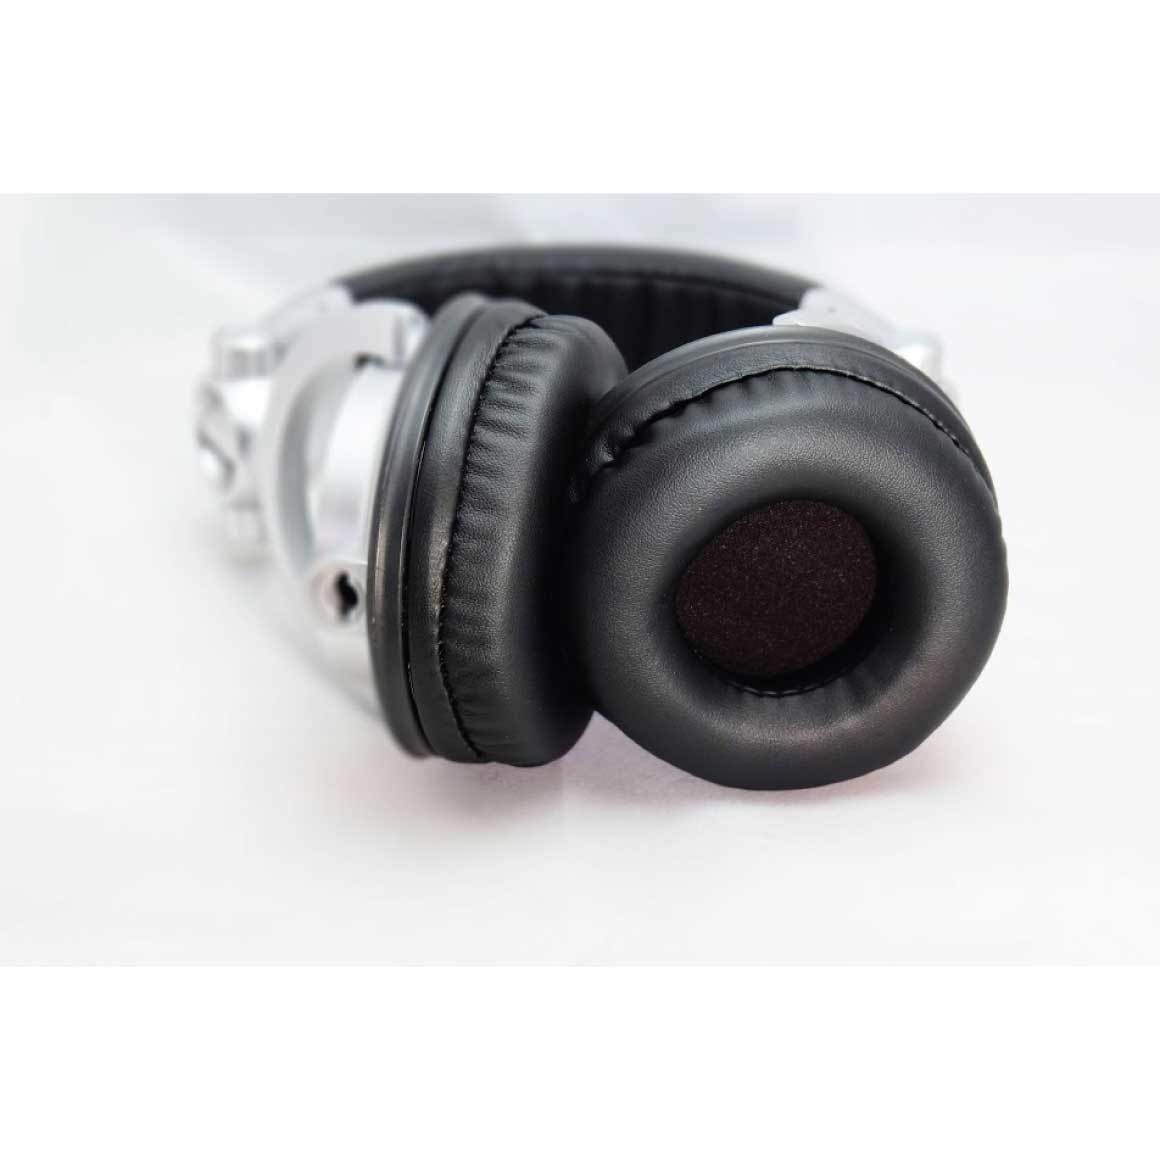 Dekoni Audio - Earpads for Technics RP-DJ1200